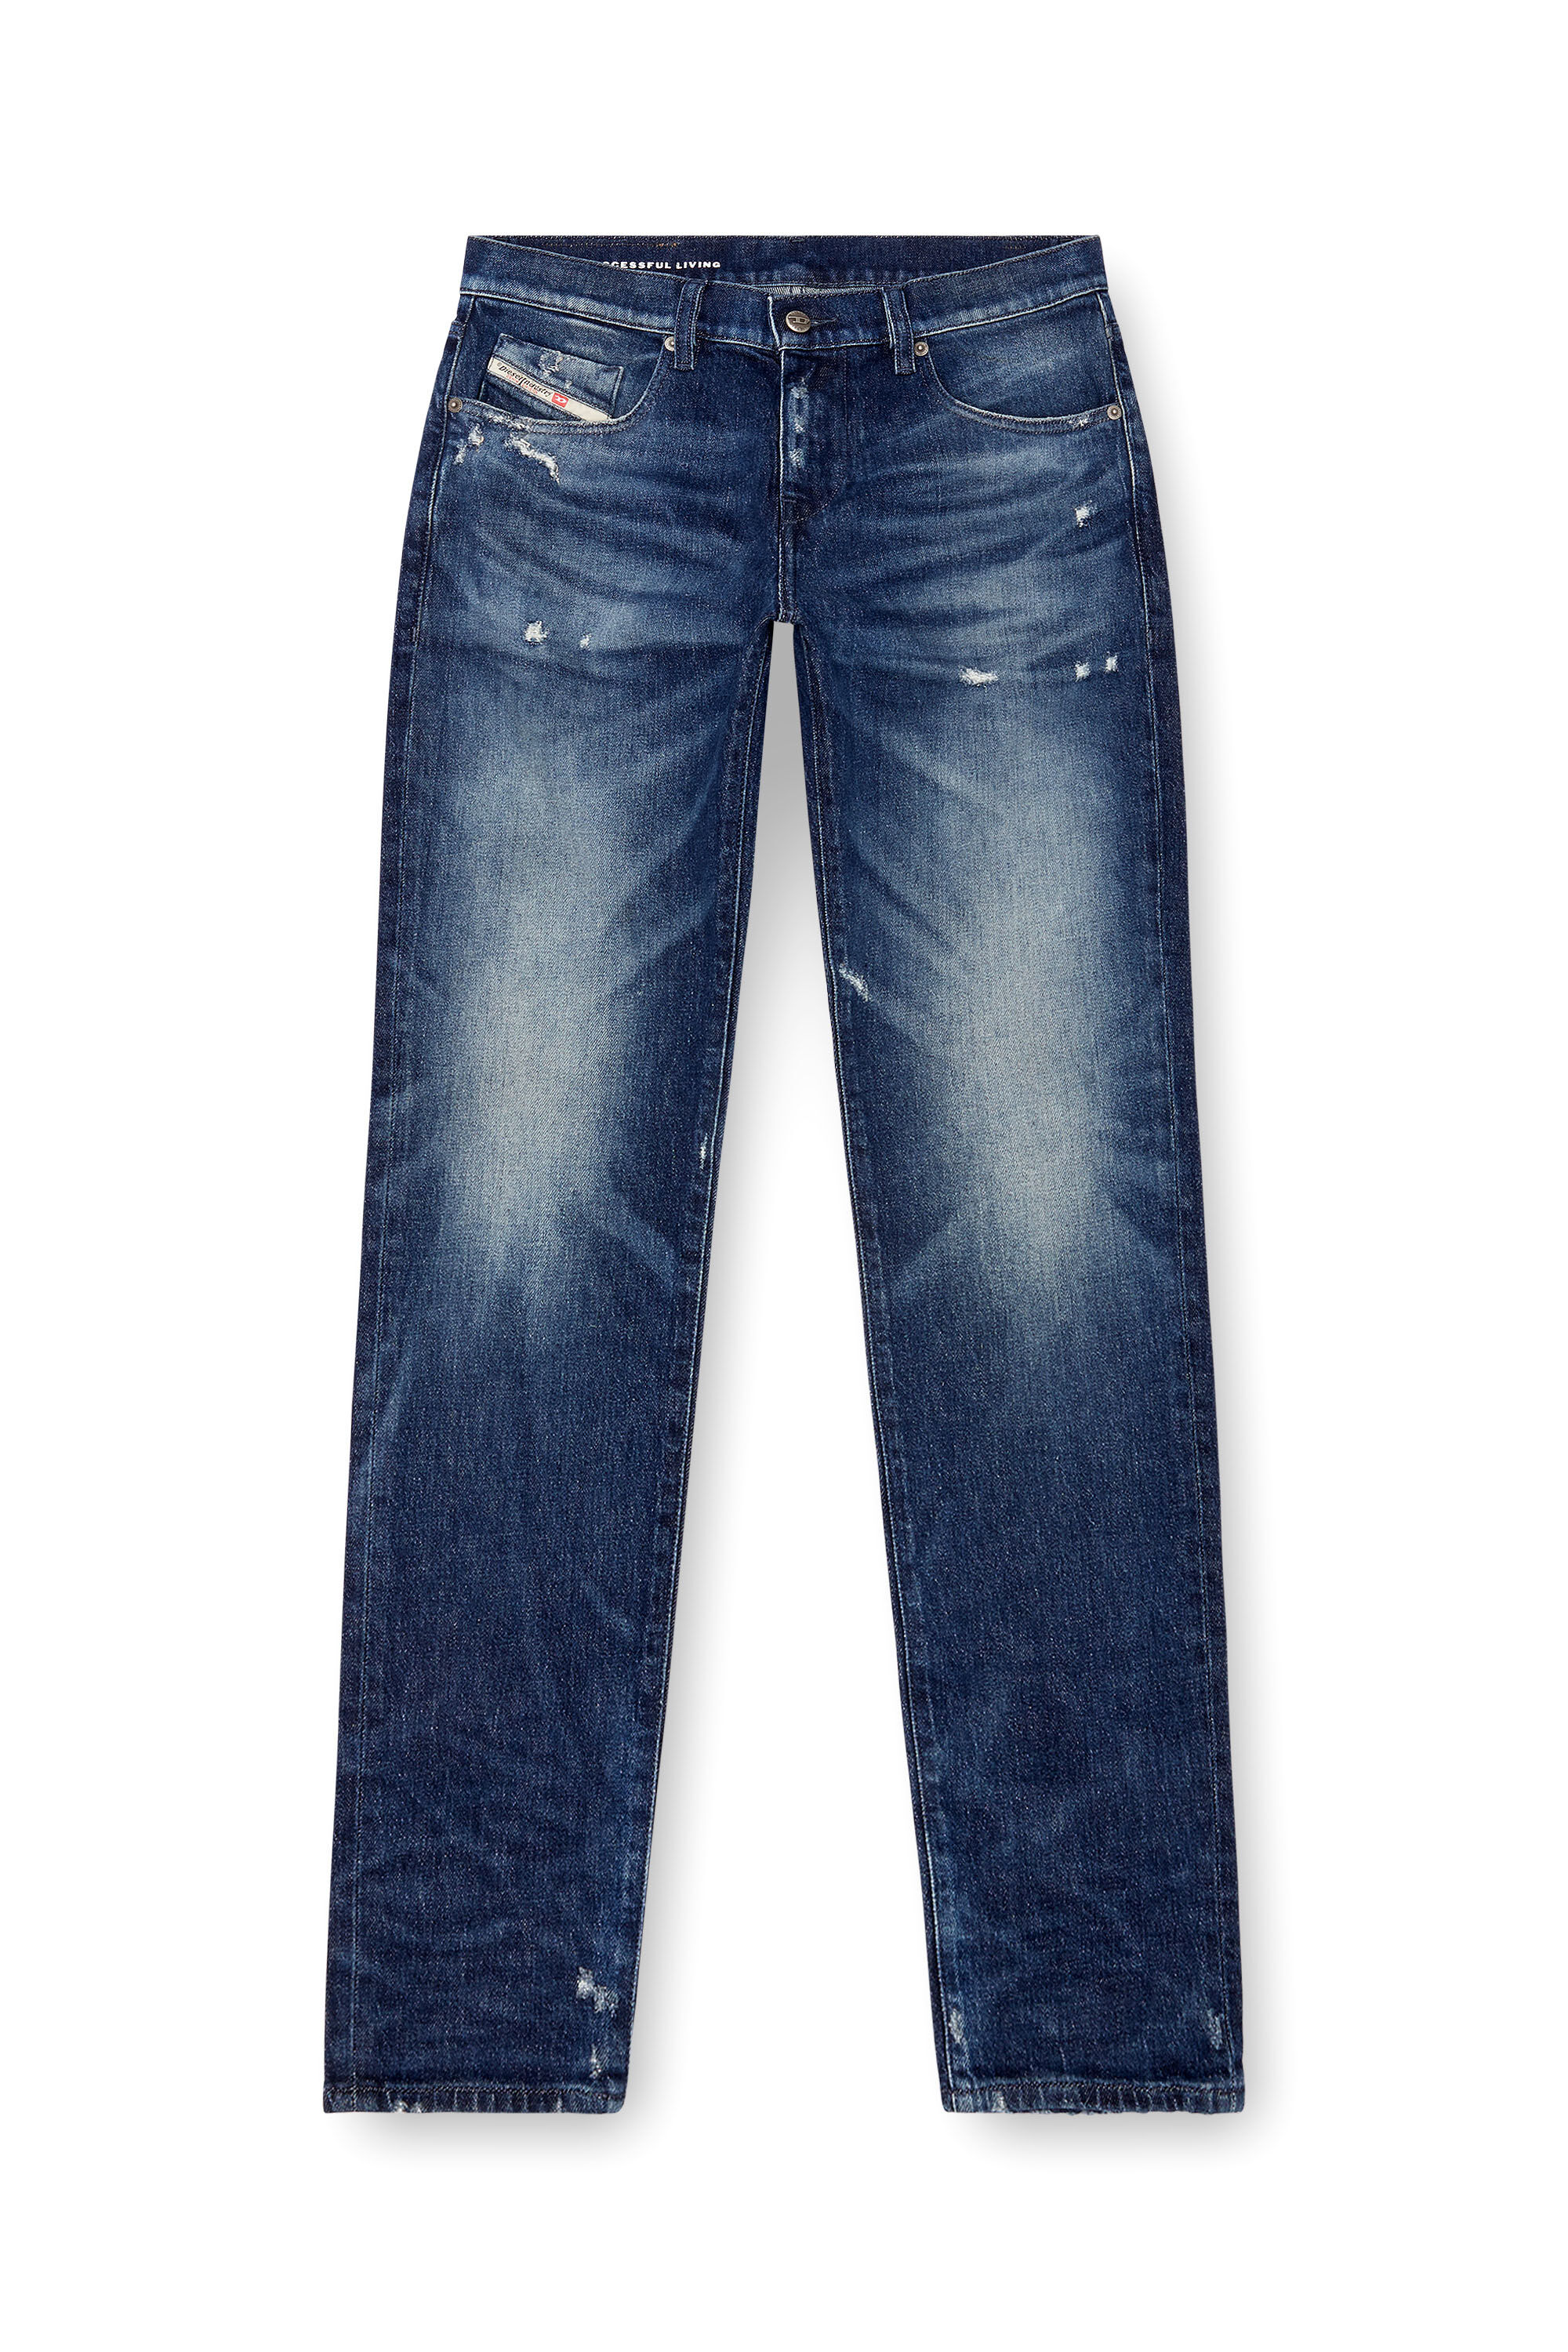 Diesel - Slim Jeans 2019 D-Strukt 09J56, Hombre Slim Jeans - 2019 D-Strukt in Azul marino - Image 2